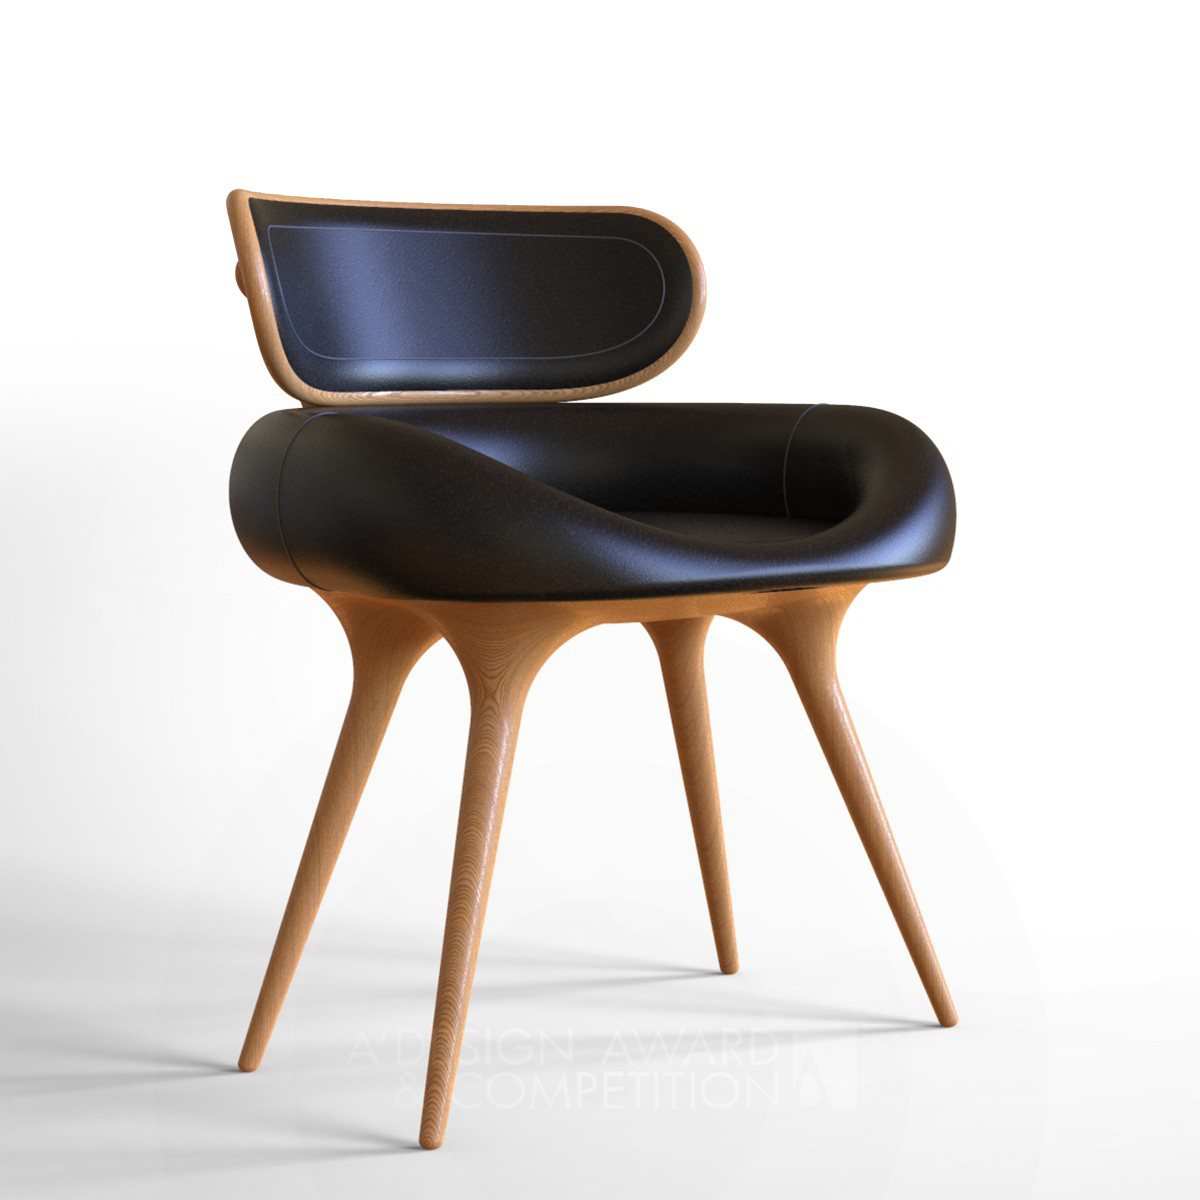 Lunule Chair by Arsalan Ghadimi